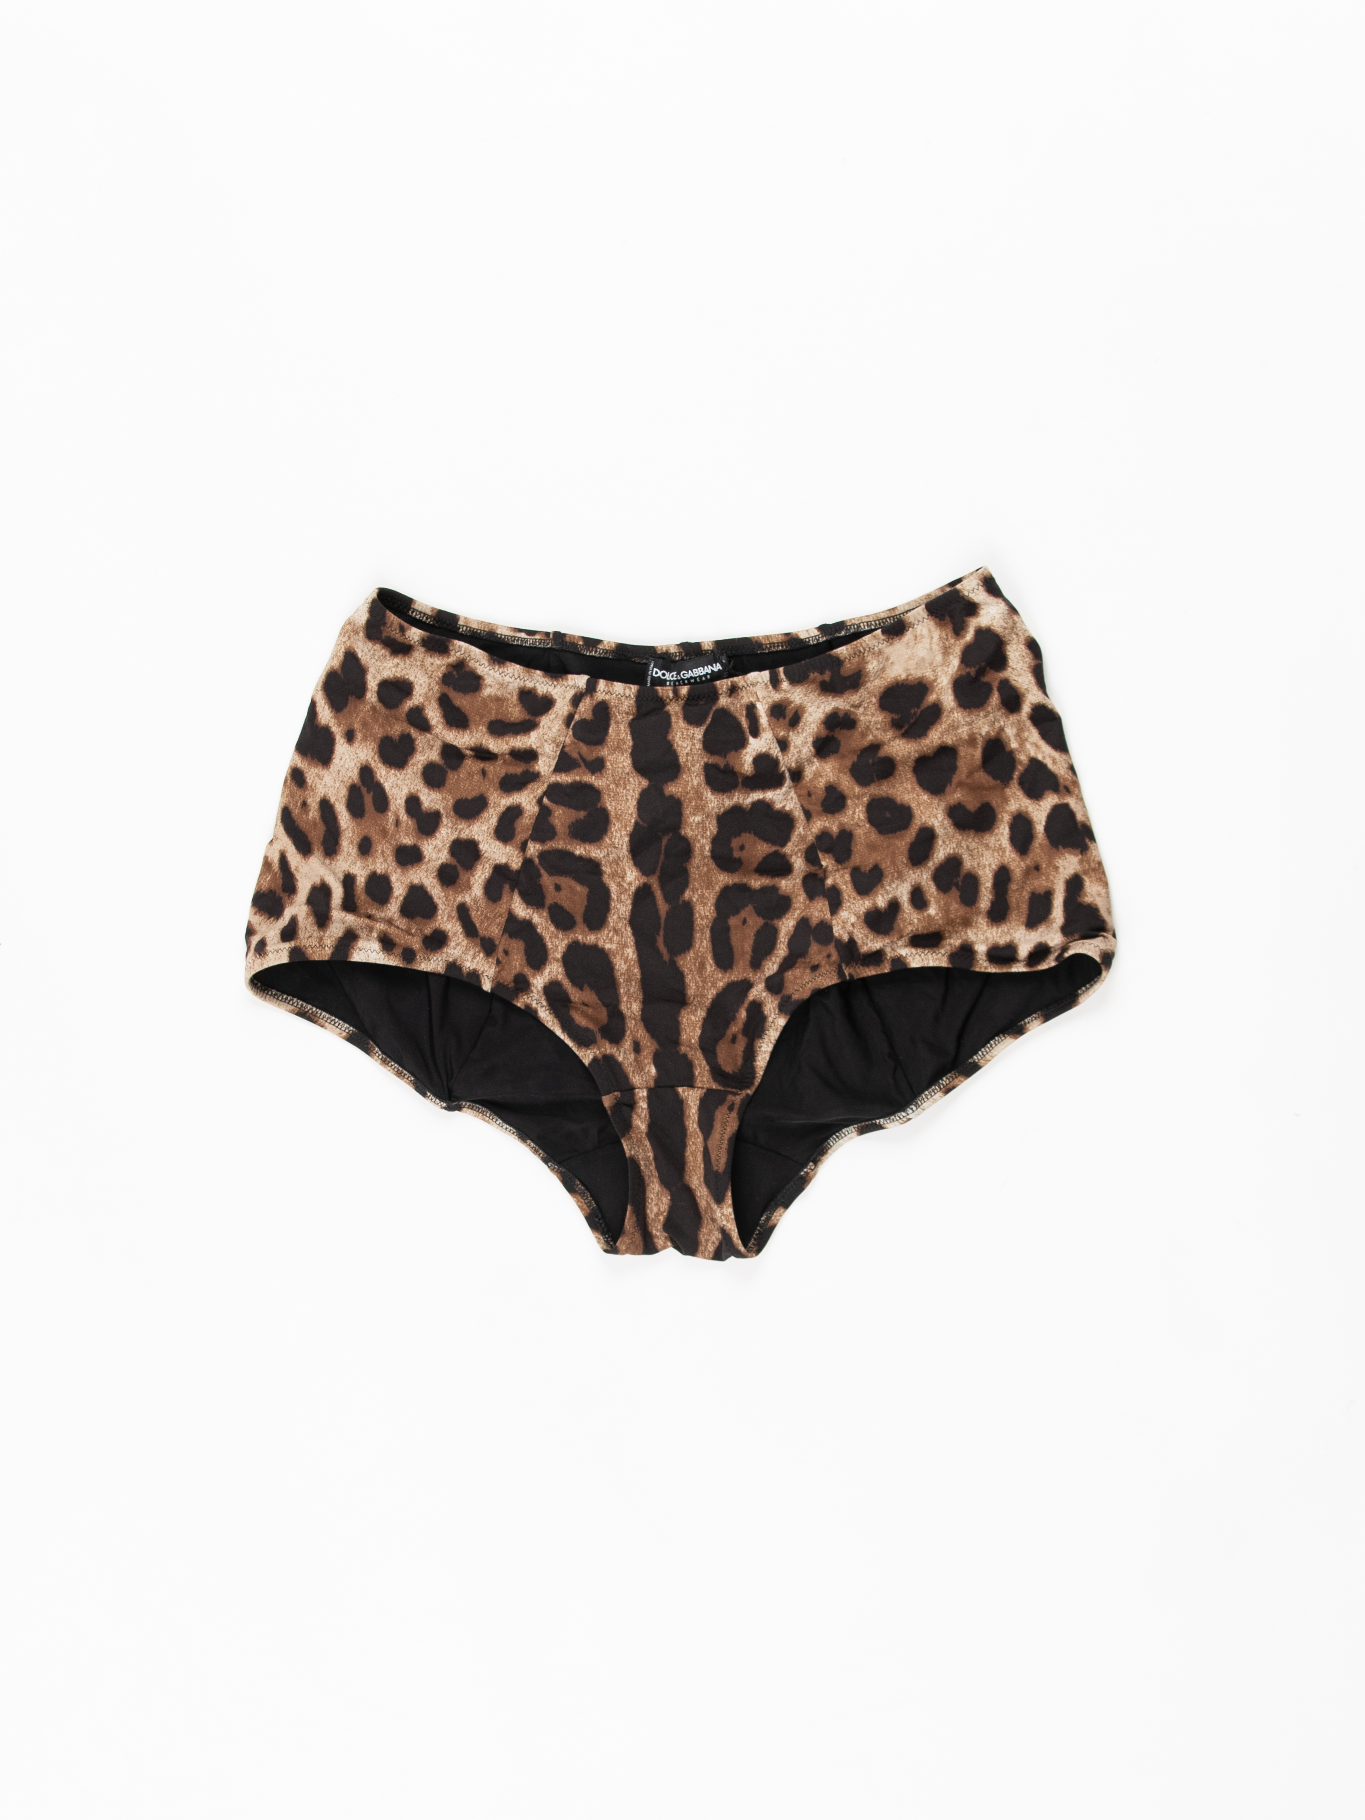 Leopard Print Bikini Bottoms